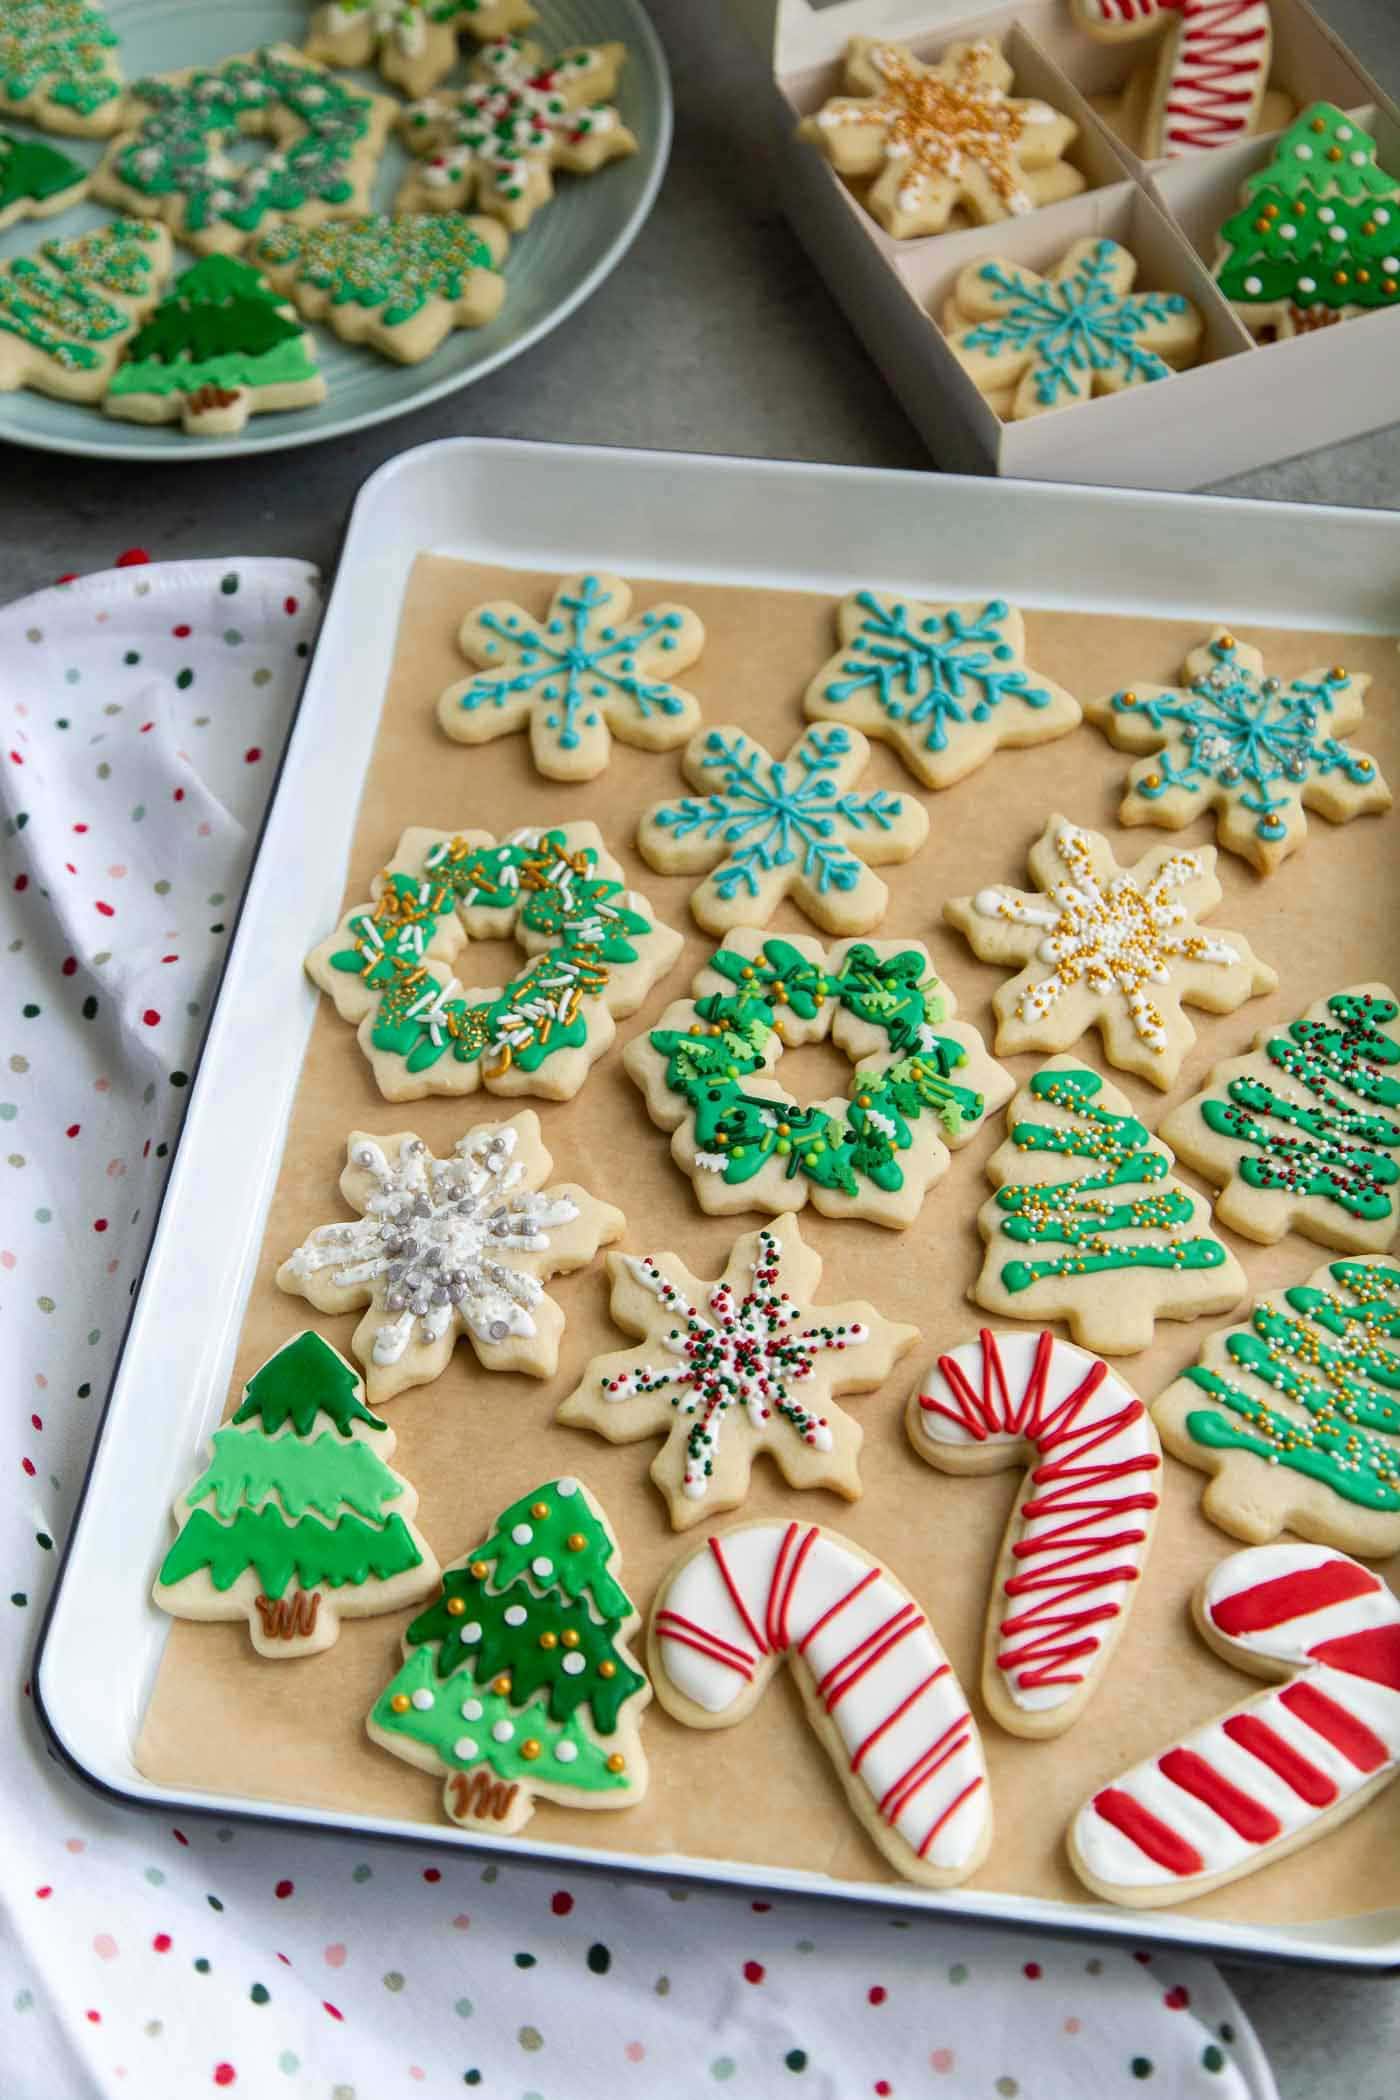 Decorated Sugar Cookies - The Little Epicurean